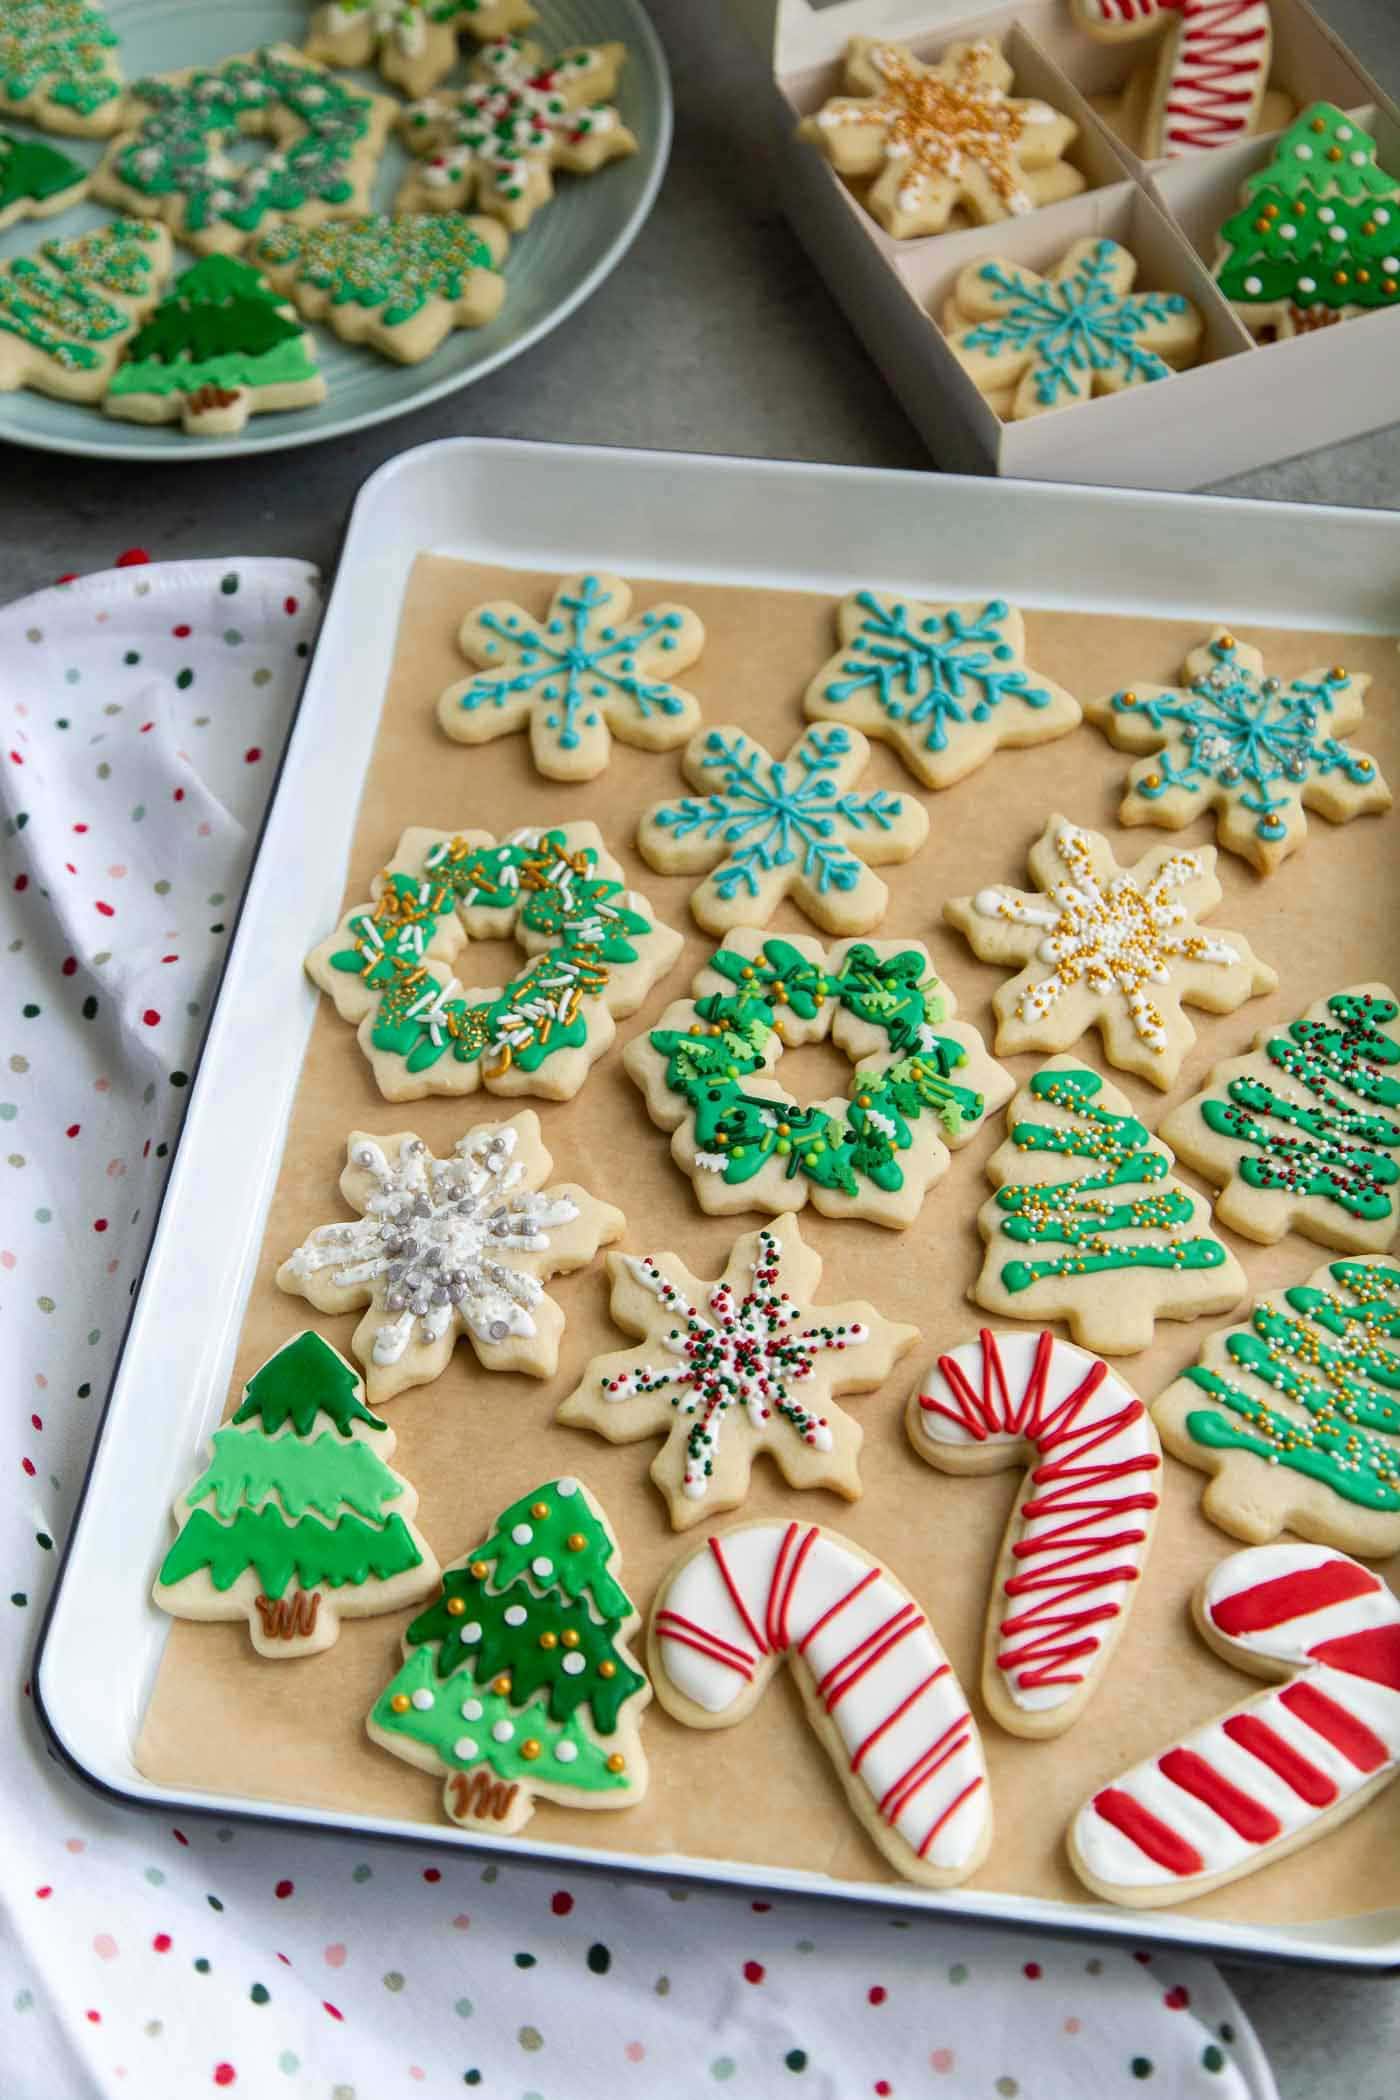 Decorated Sugar Cookies - The Little Epicurean